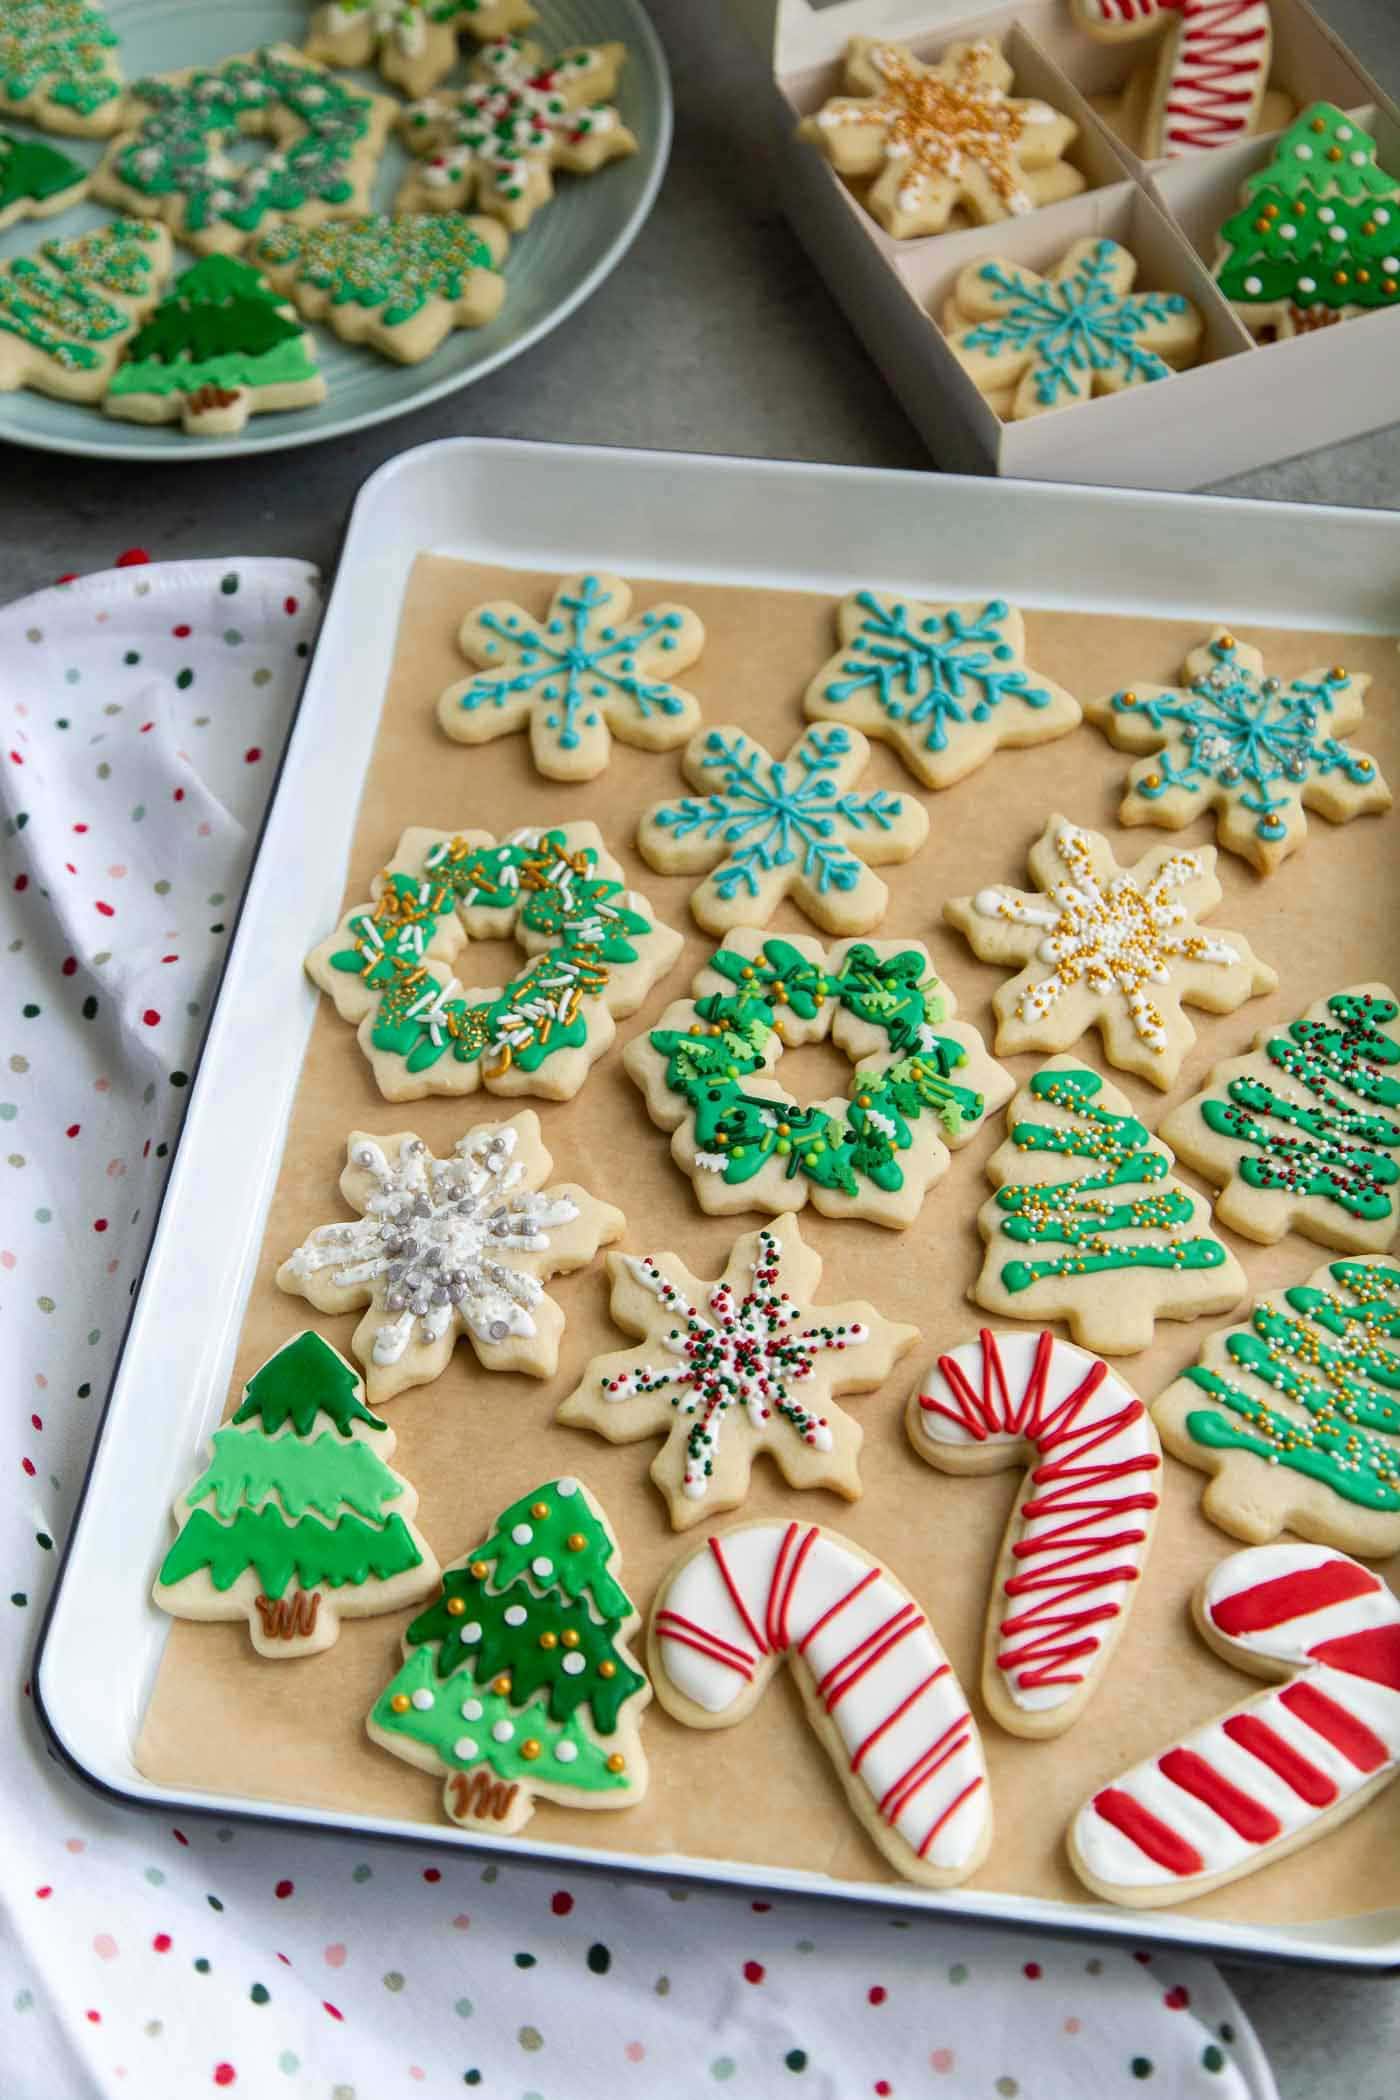 Decorated Sugar Cookies - The Little Epicurean